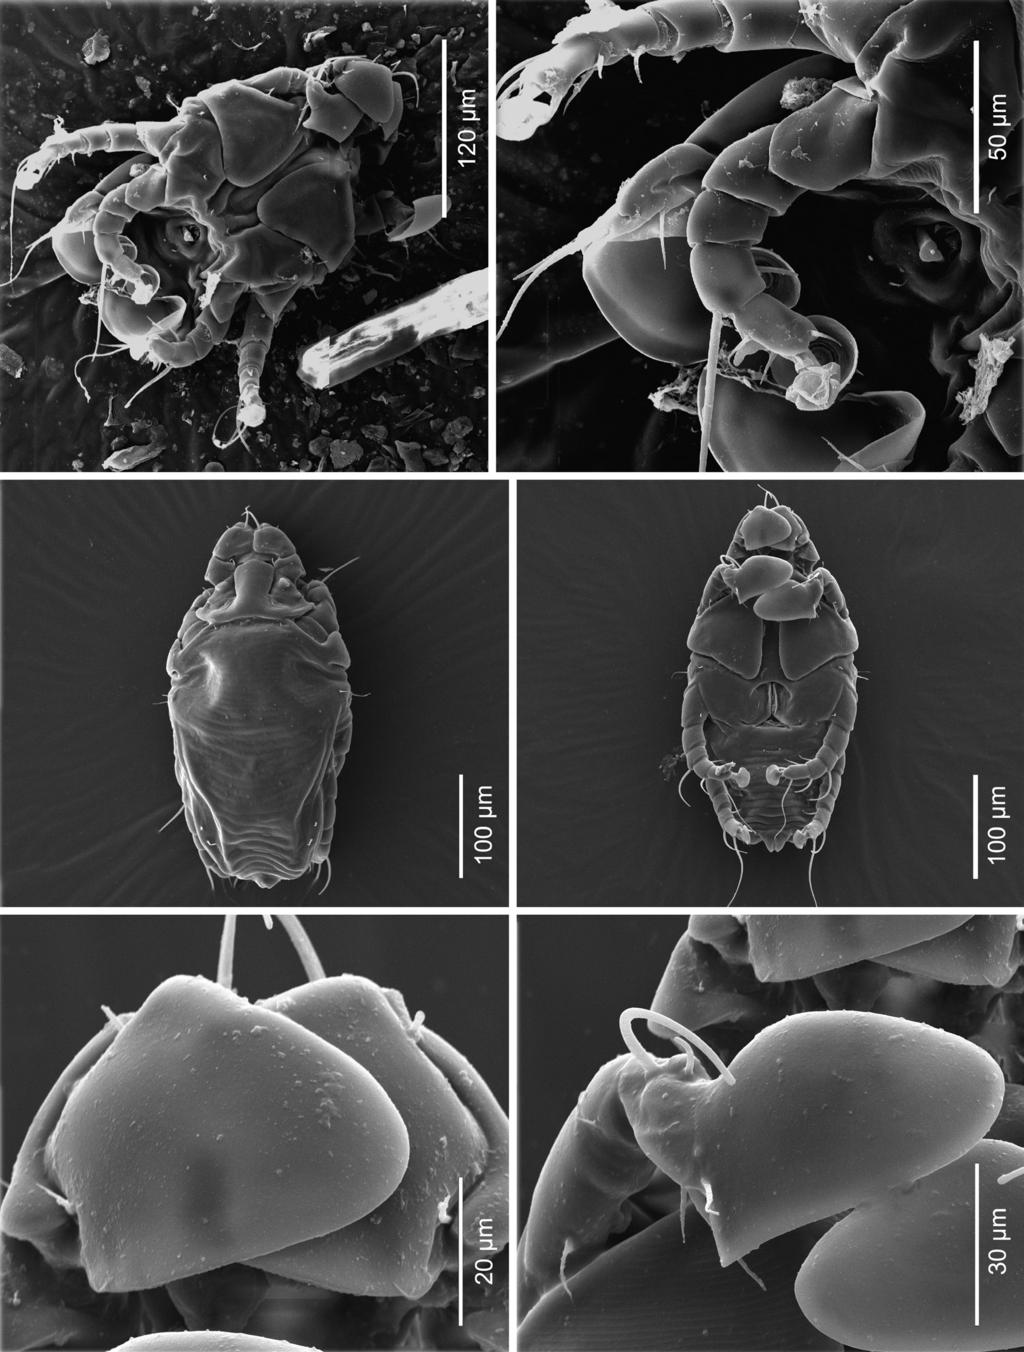 E F Fig. 9. Schizocoptes daberti sp. n. from hrysochloris stuhlmanni Matsche, scanning electron micrographs.